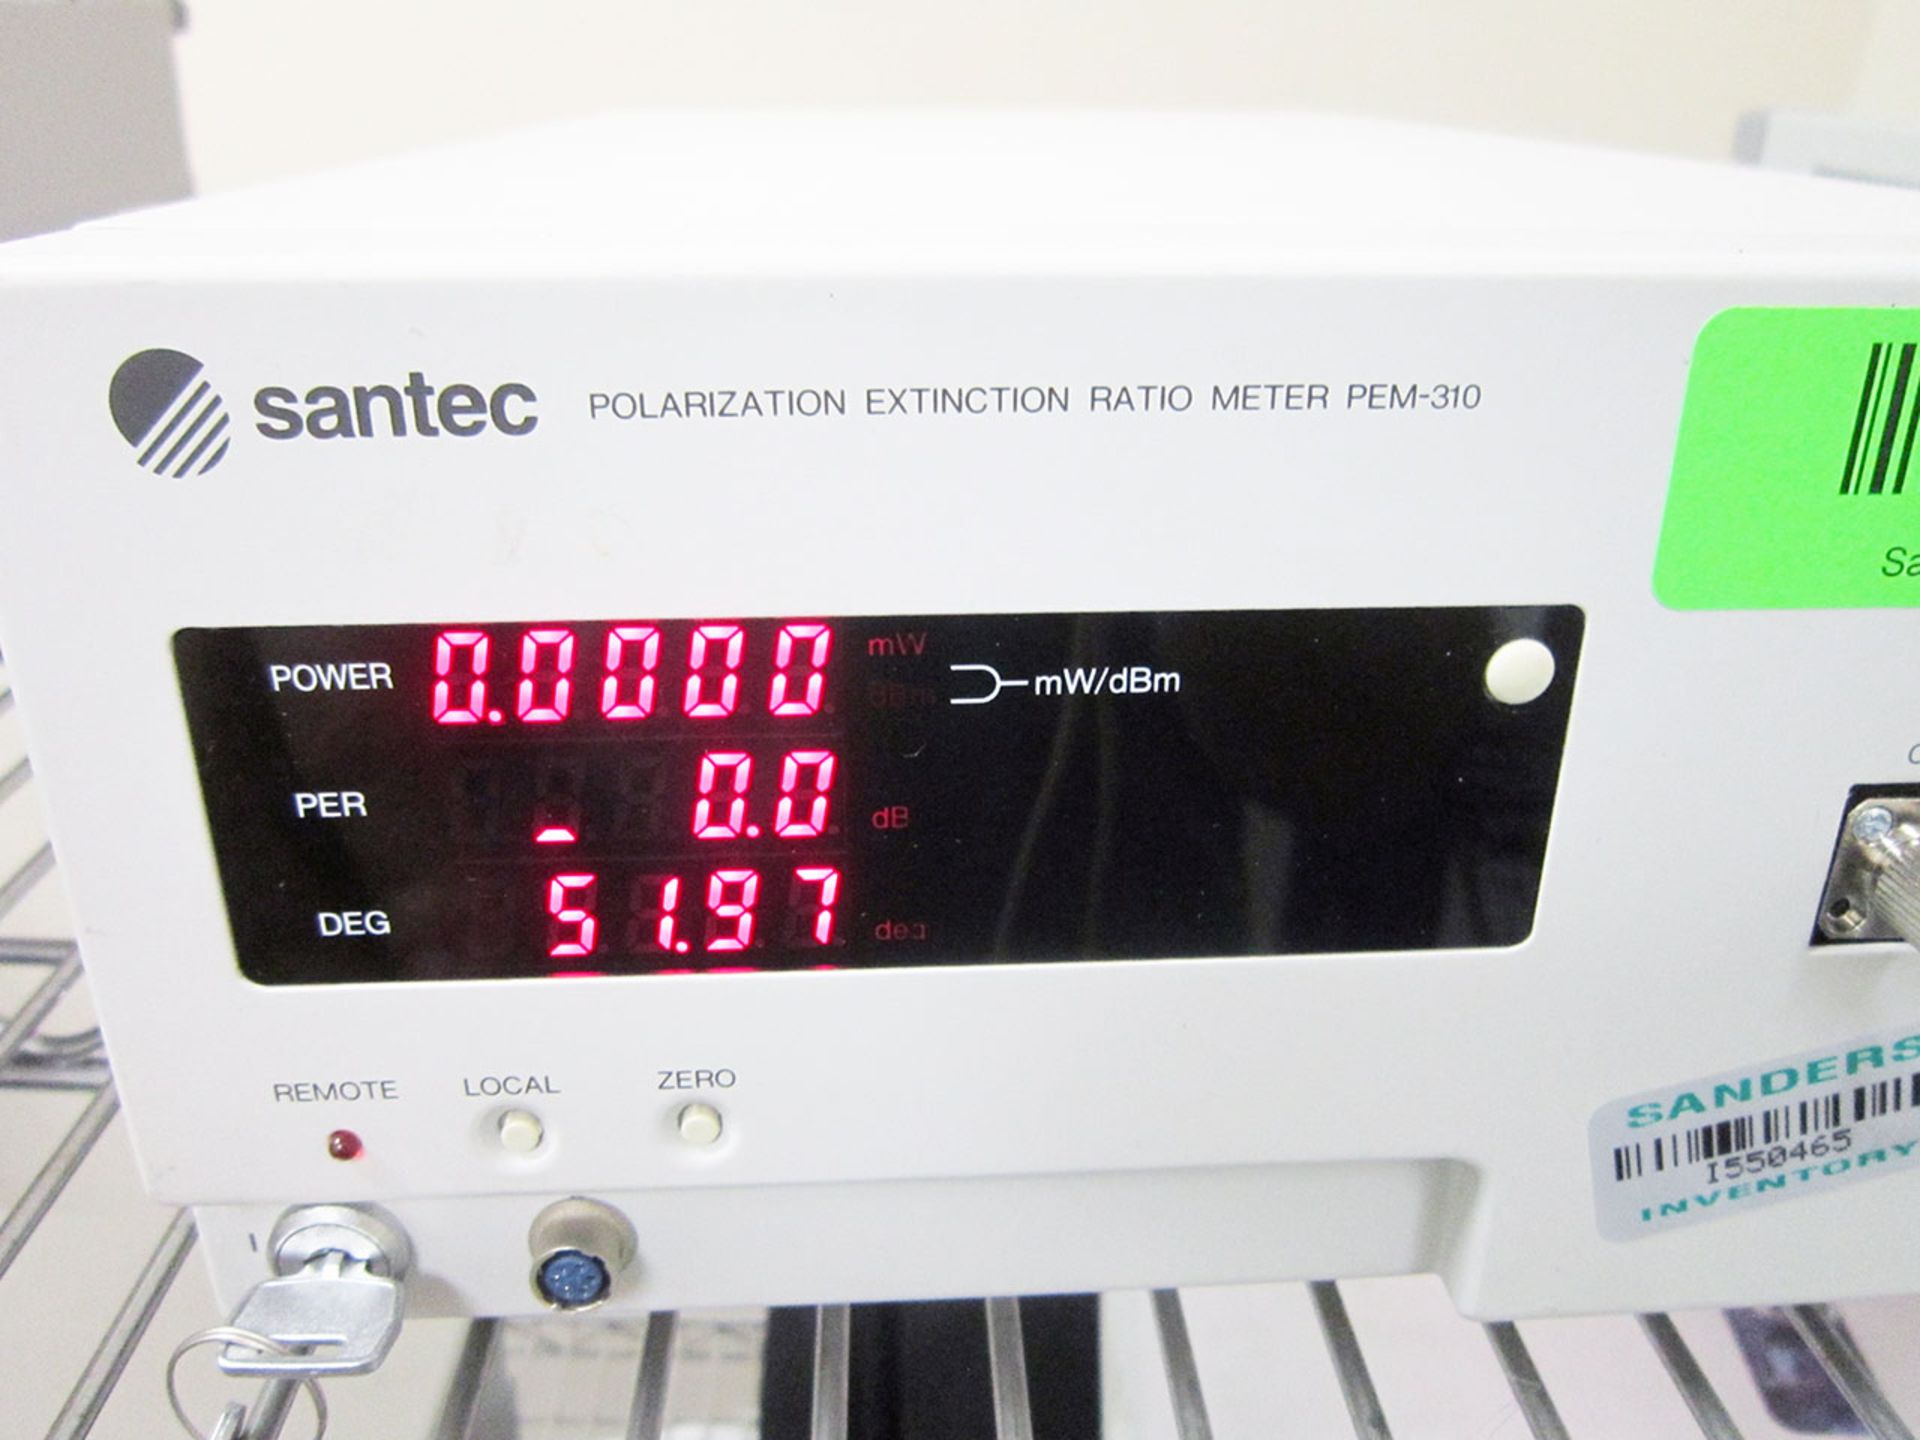 Santec PEM-310 Polarization Extinction Ratio Meter - Image 2 of 3